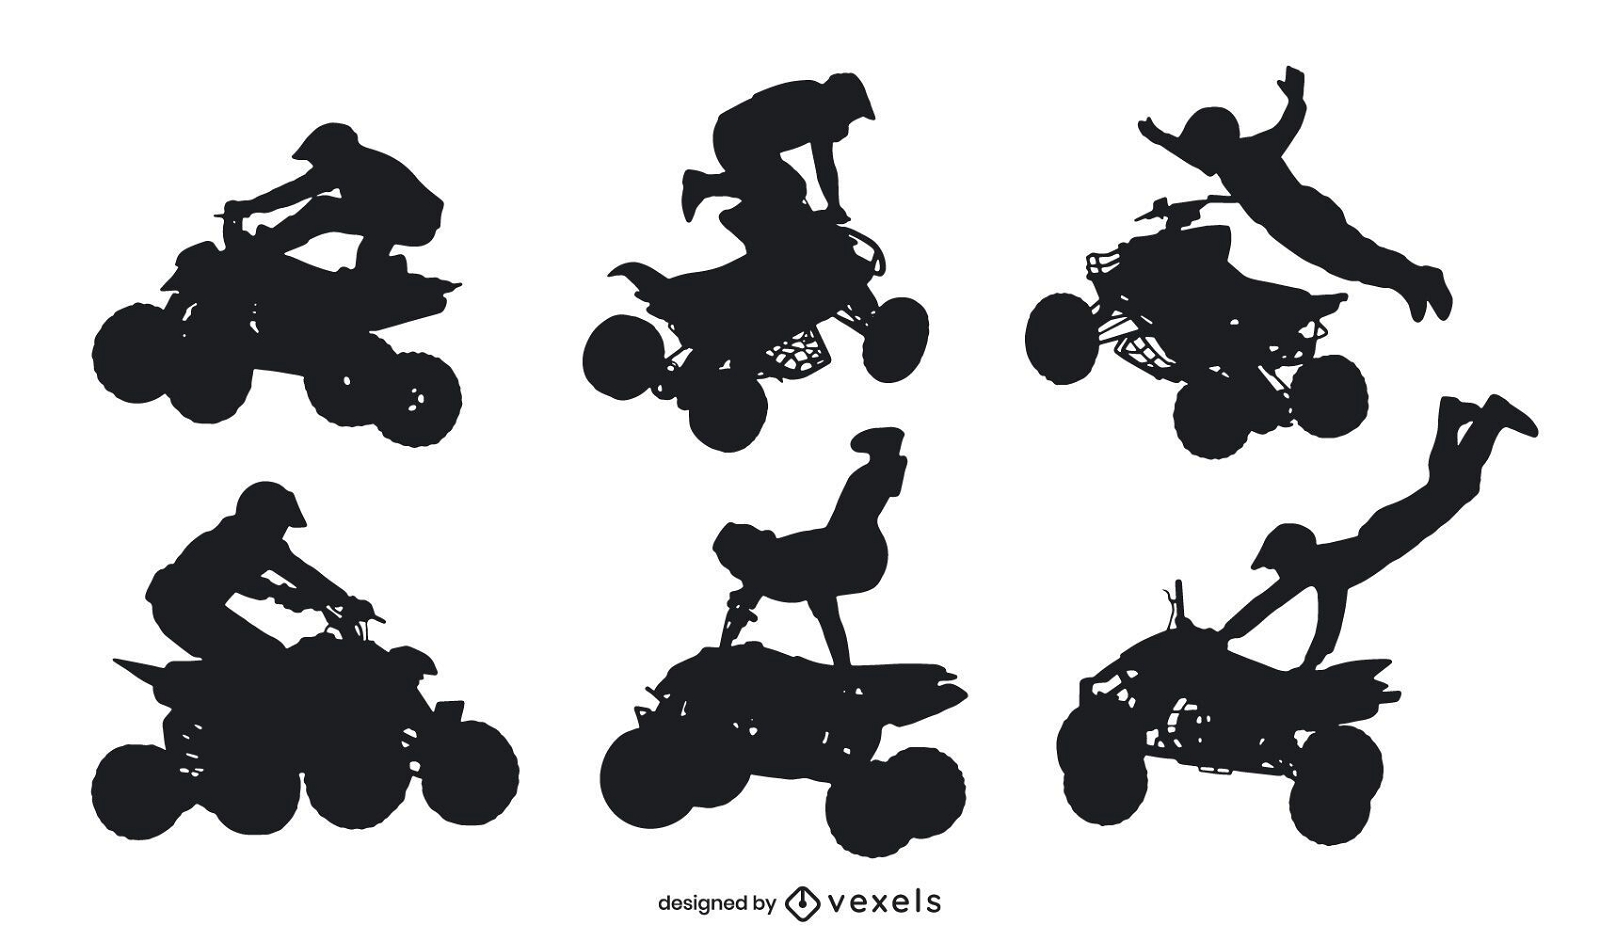 Quad bike extreme poses silhouette set